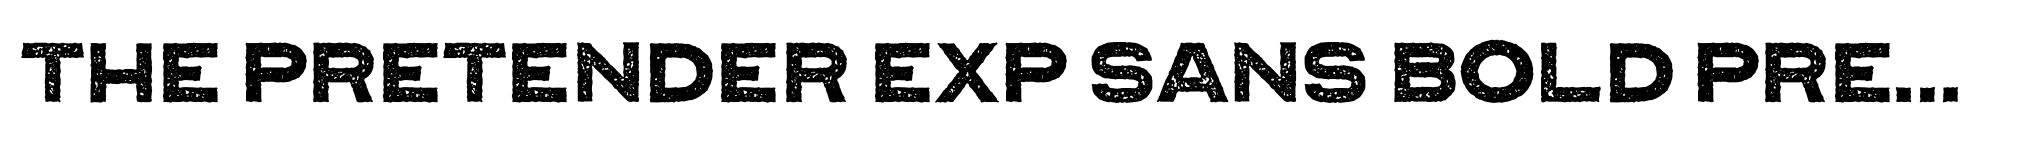 The Pretender Exp Sans Bold Press image